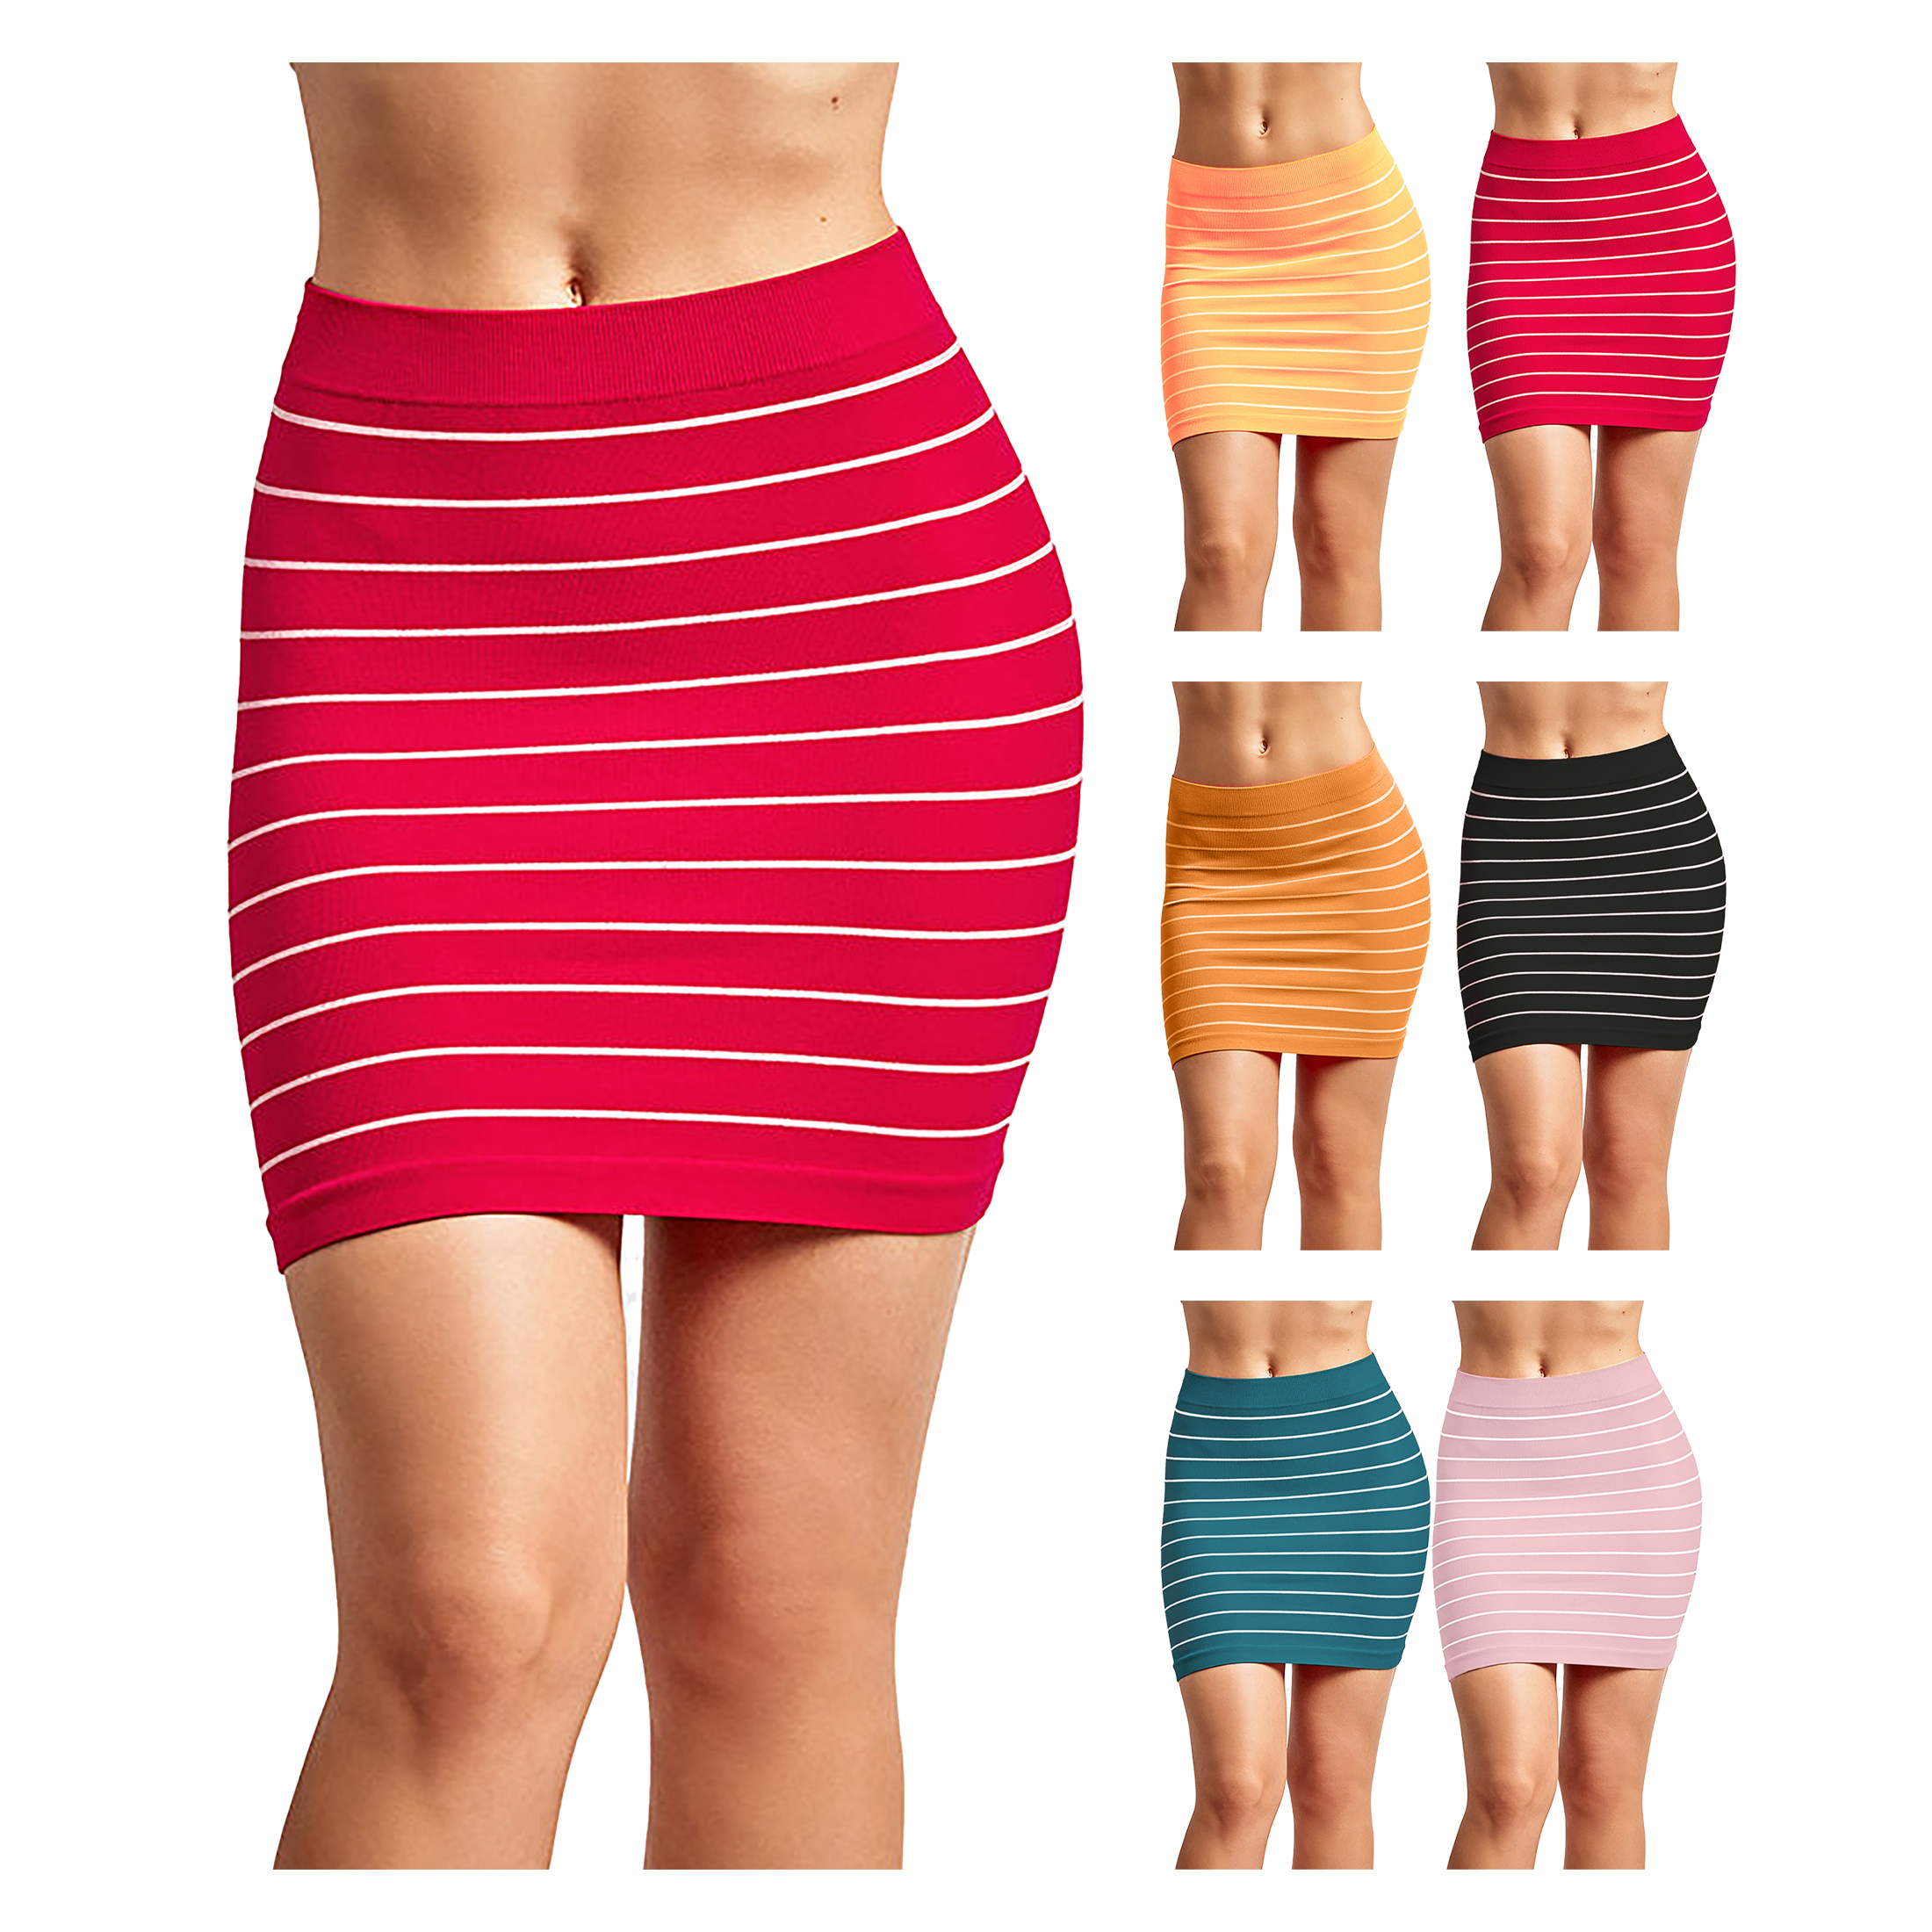 3-Pack: Women's Striped Seamless Microfiber Slim Nylon Pull-On Closure Mini Skirts - Small